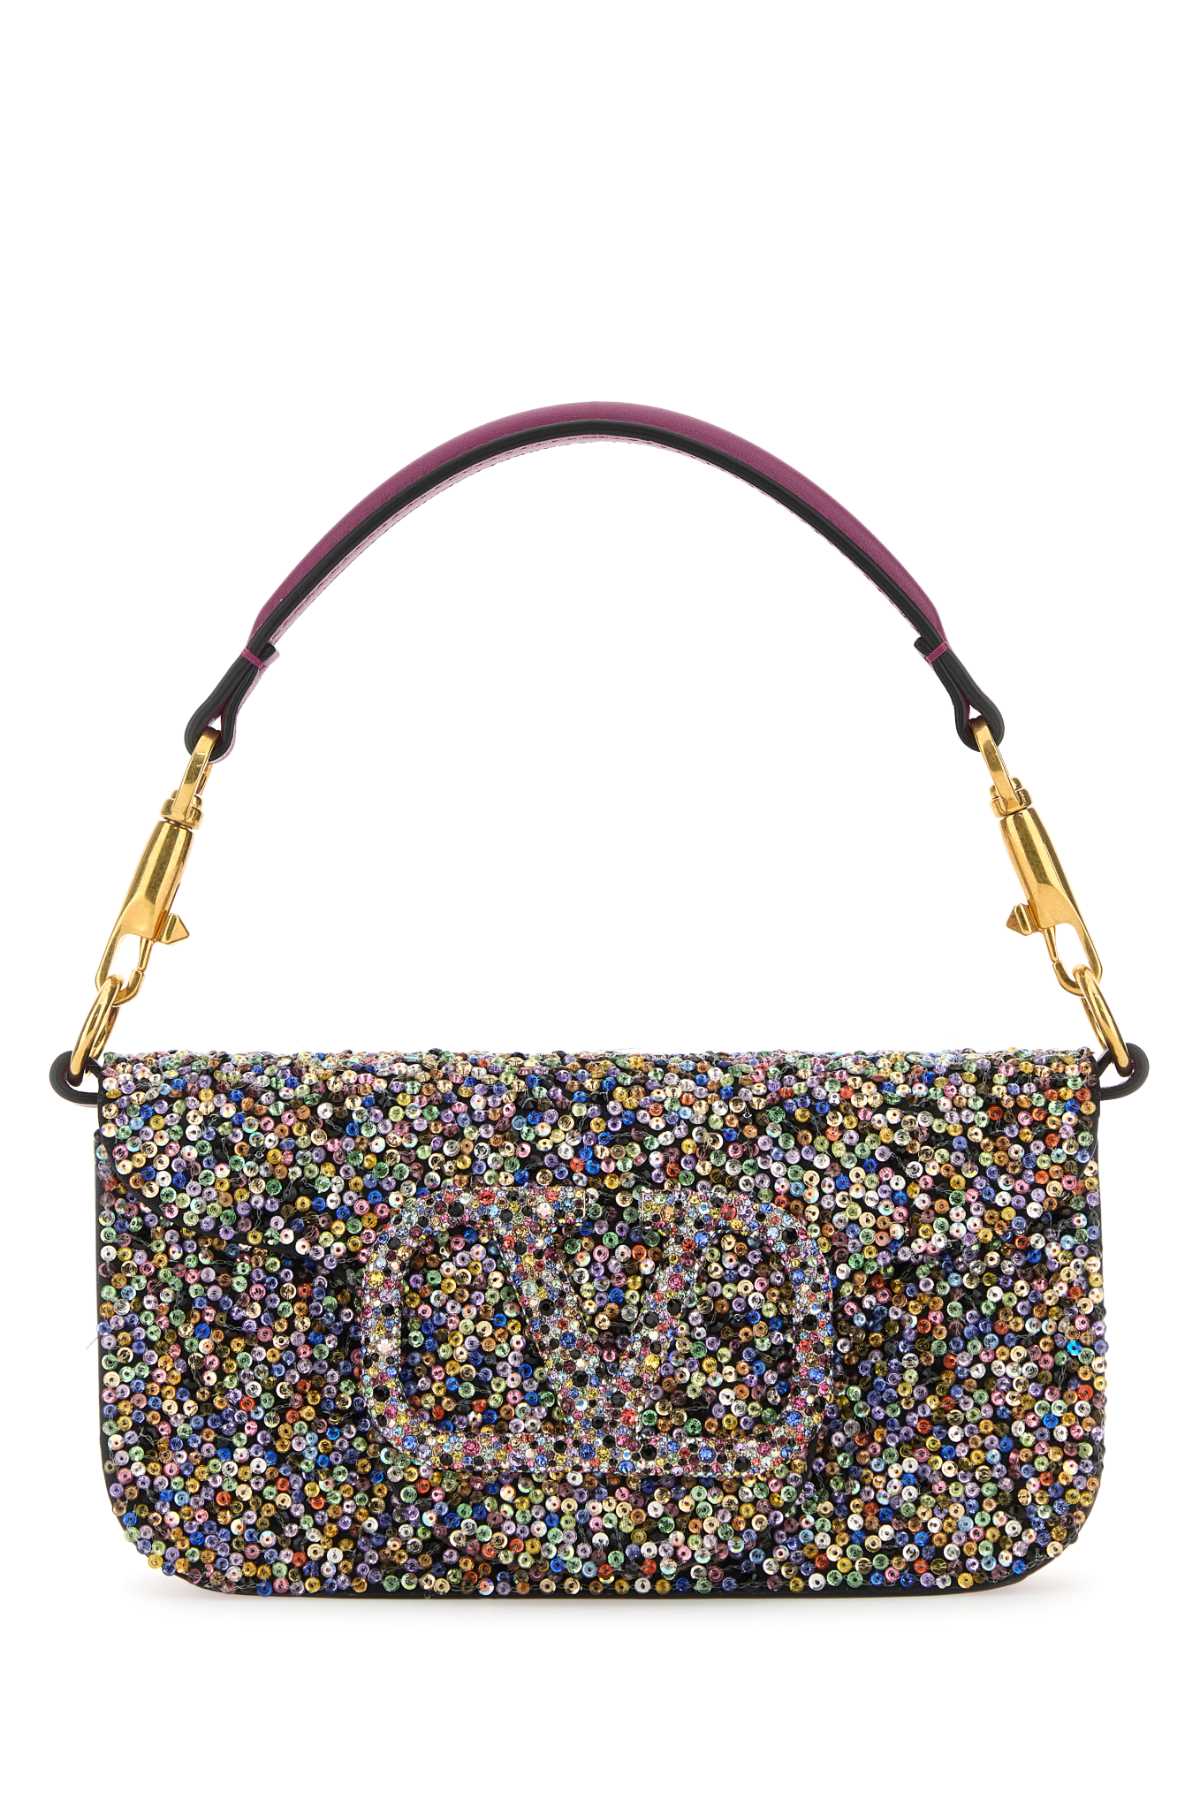 Valentino Garavani Embellished Leather Small Locã² Handbag In Multicolormagentapurplemulticolor